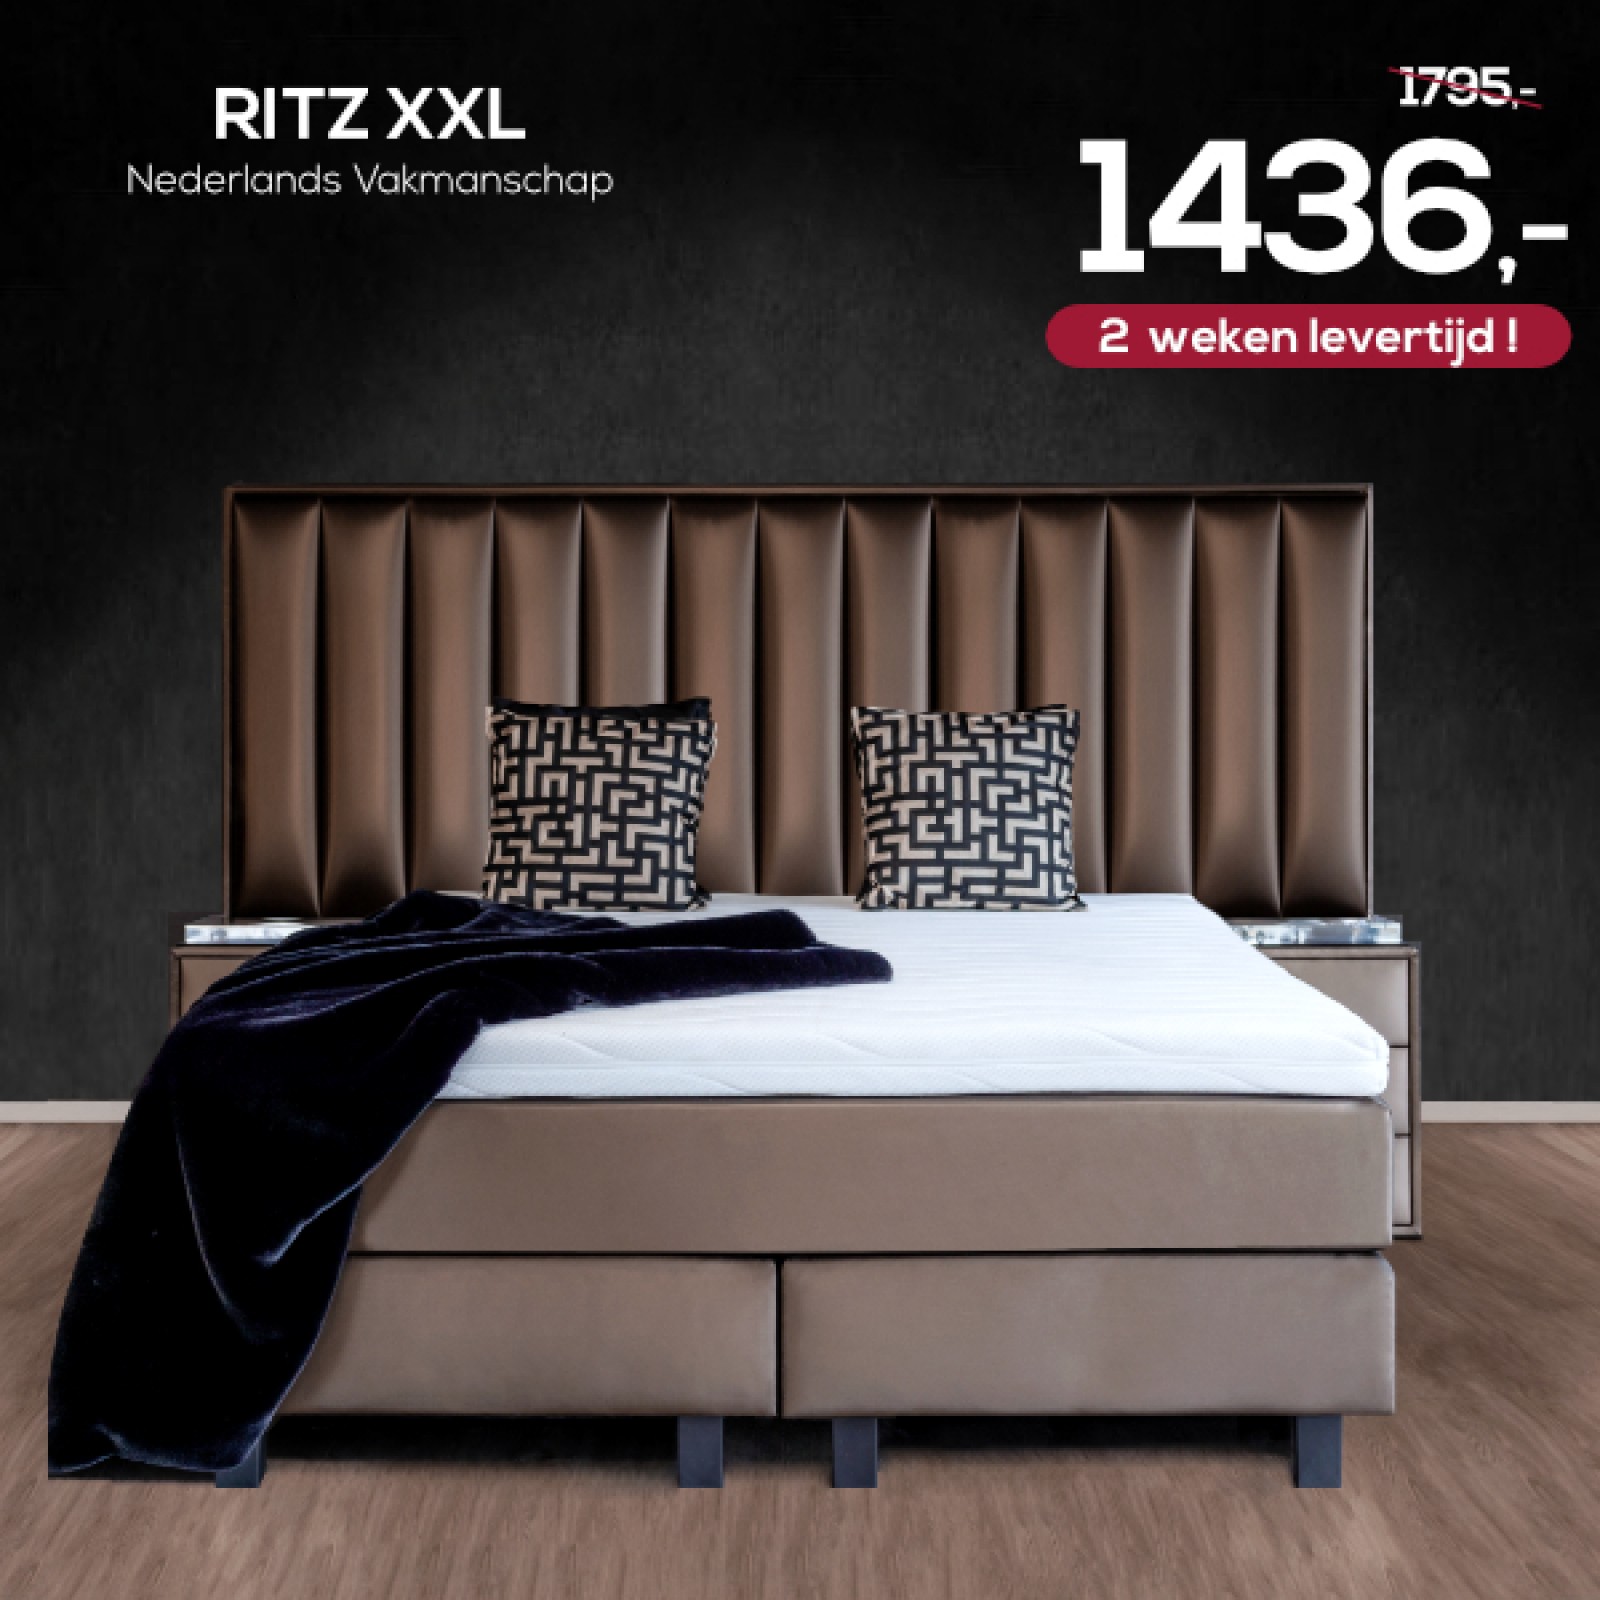 Ritz XXL